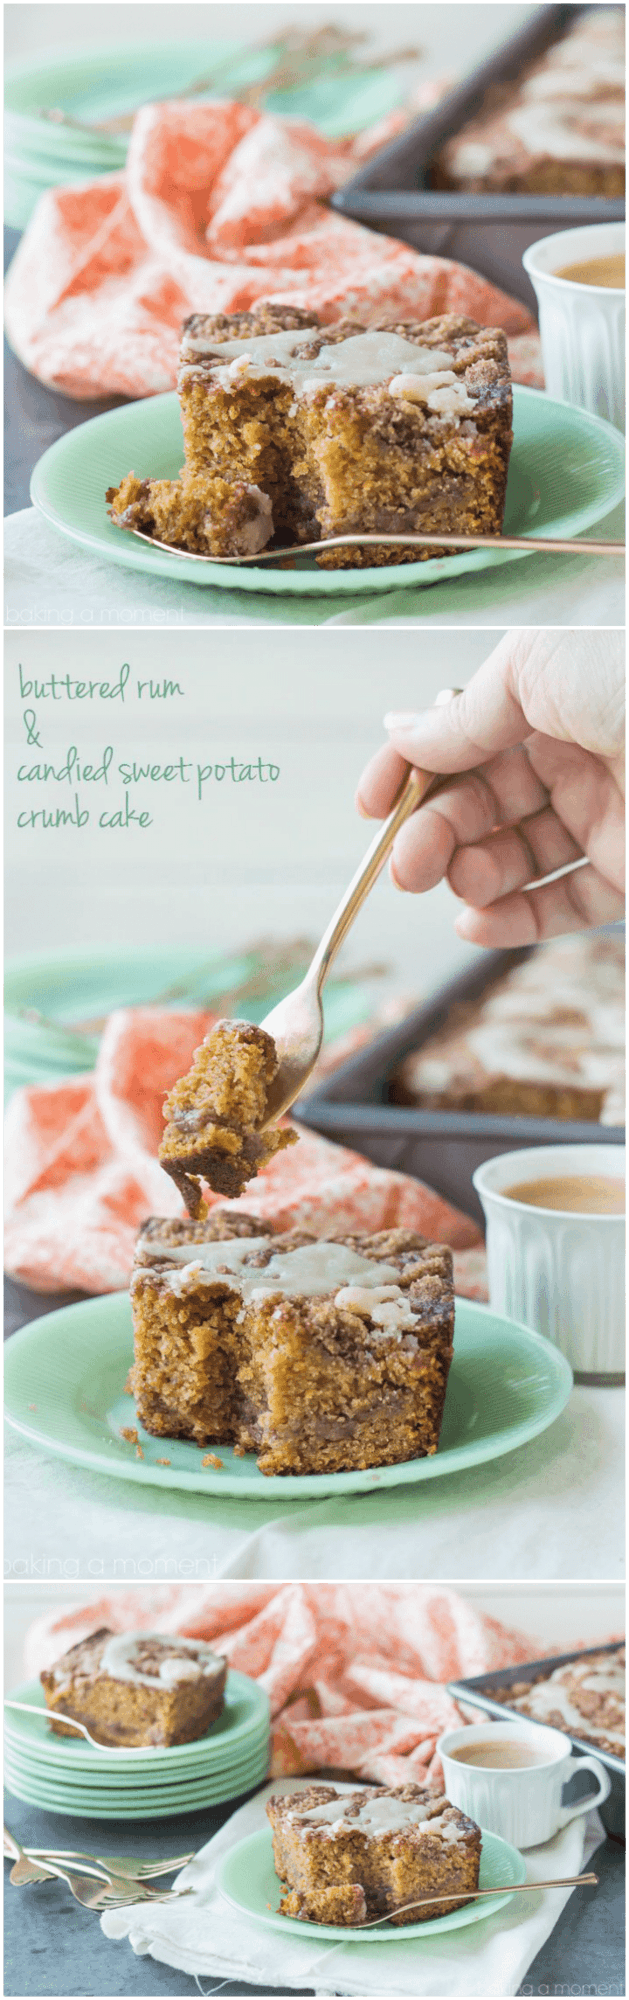 Buttered Rum & Candied Sweet Potato Crumb Cake #grandbabycakesbook